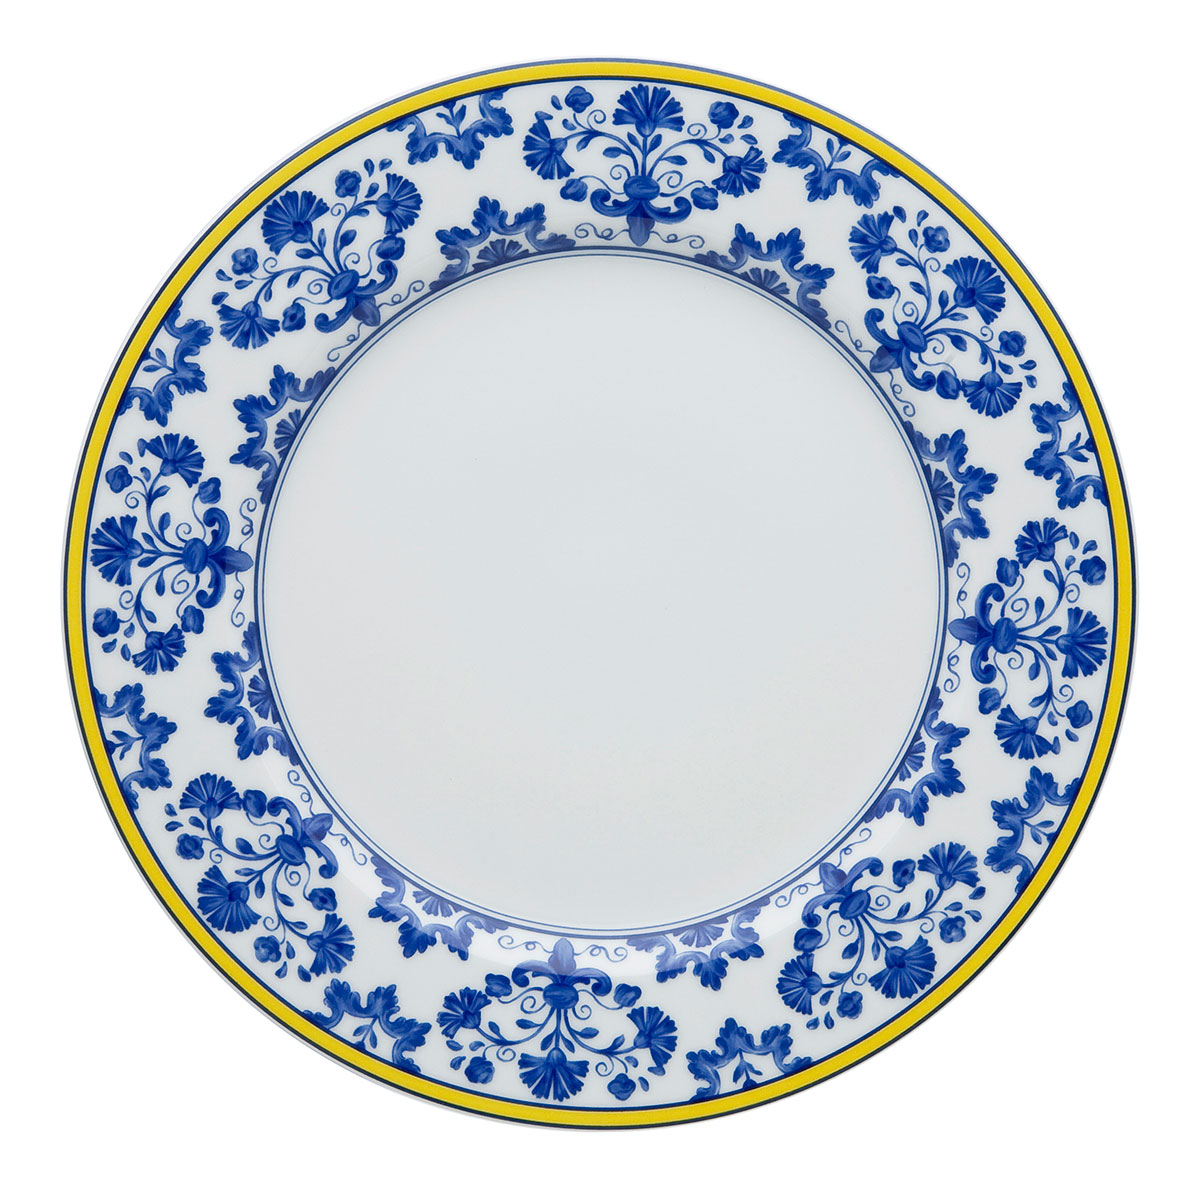 Vista Alegre Porcelain Castelo Branco Dinner Plate